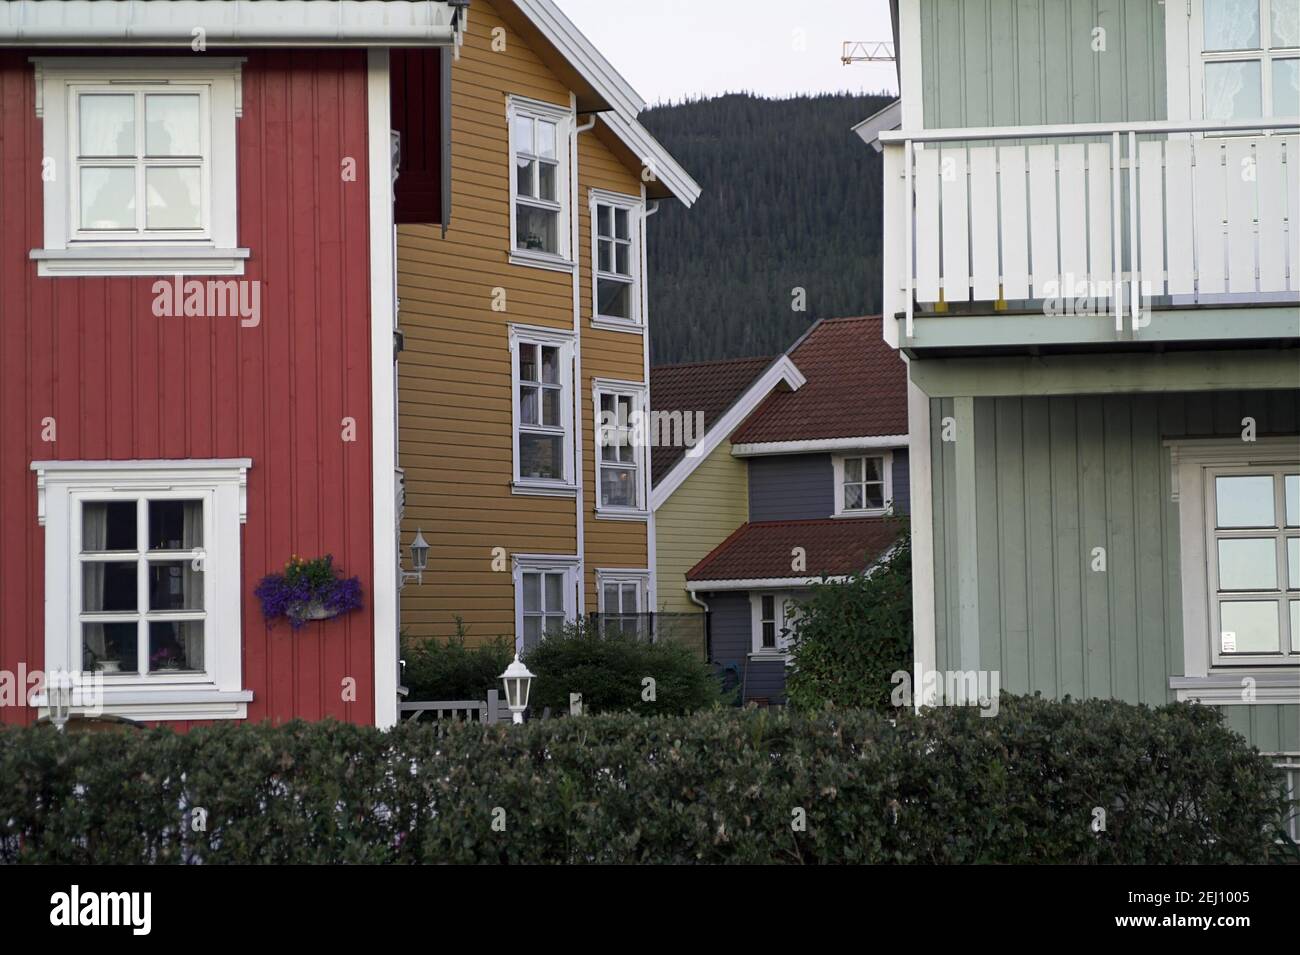 Mo i Rana, Norvège Norwegen; maisons en bois typiques du nord de la Norvège; Holzhäuser typisch für Nordnorwegen Casas de madera típicas del norte de Noruega Banque D'Images